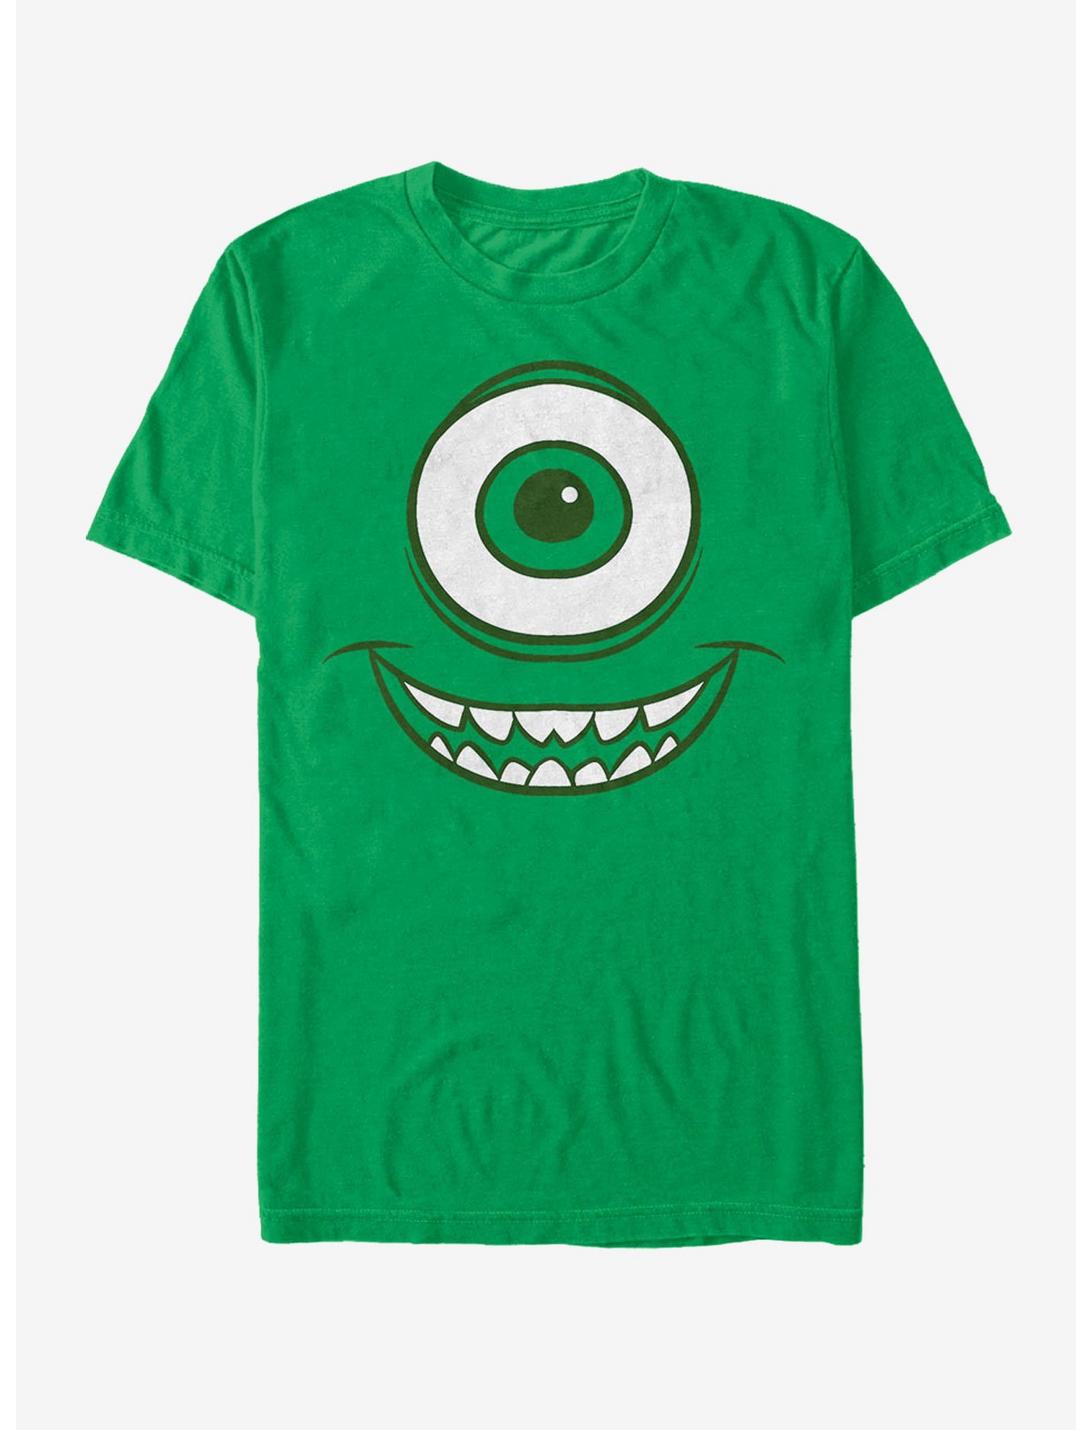 Disney Pixar Monster's Inc. Mike Wazowski Eye T-Shirt, KELLY, hi-res